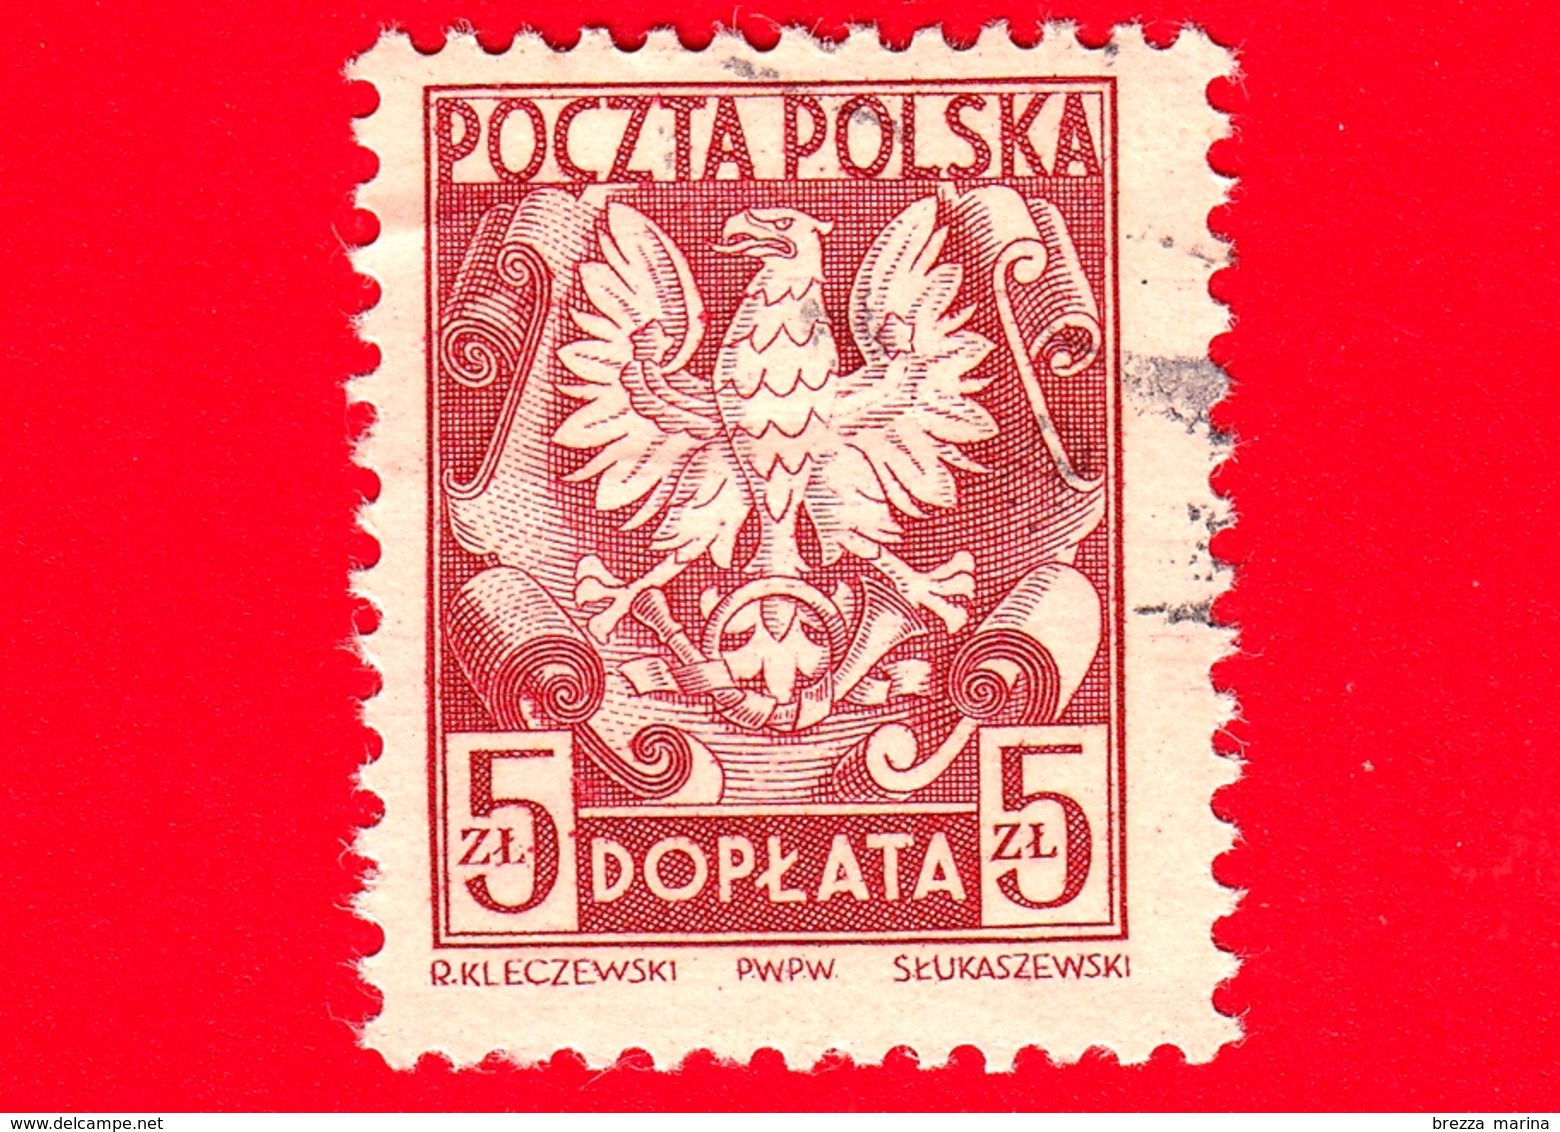 POLONIA - POLSKA - Usato - 1950 - Segnatasse - Taxe - Aquila - Coat Of Arms Of Poland - 5 - Postage Due